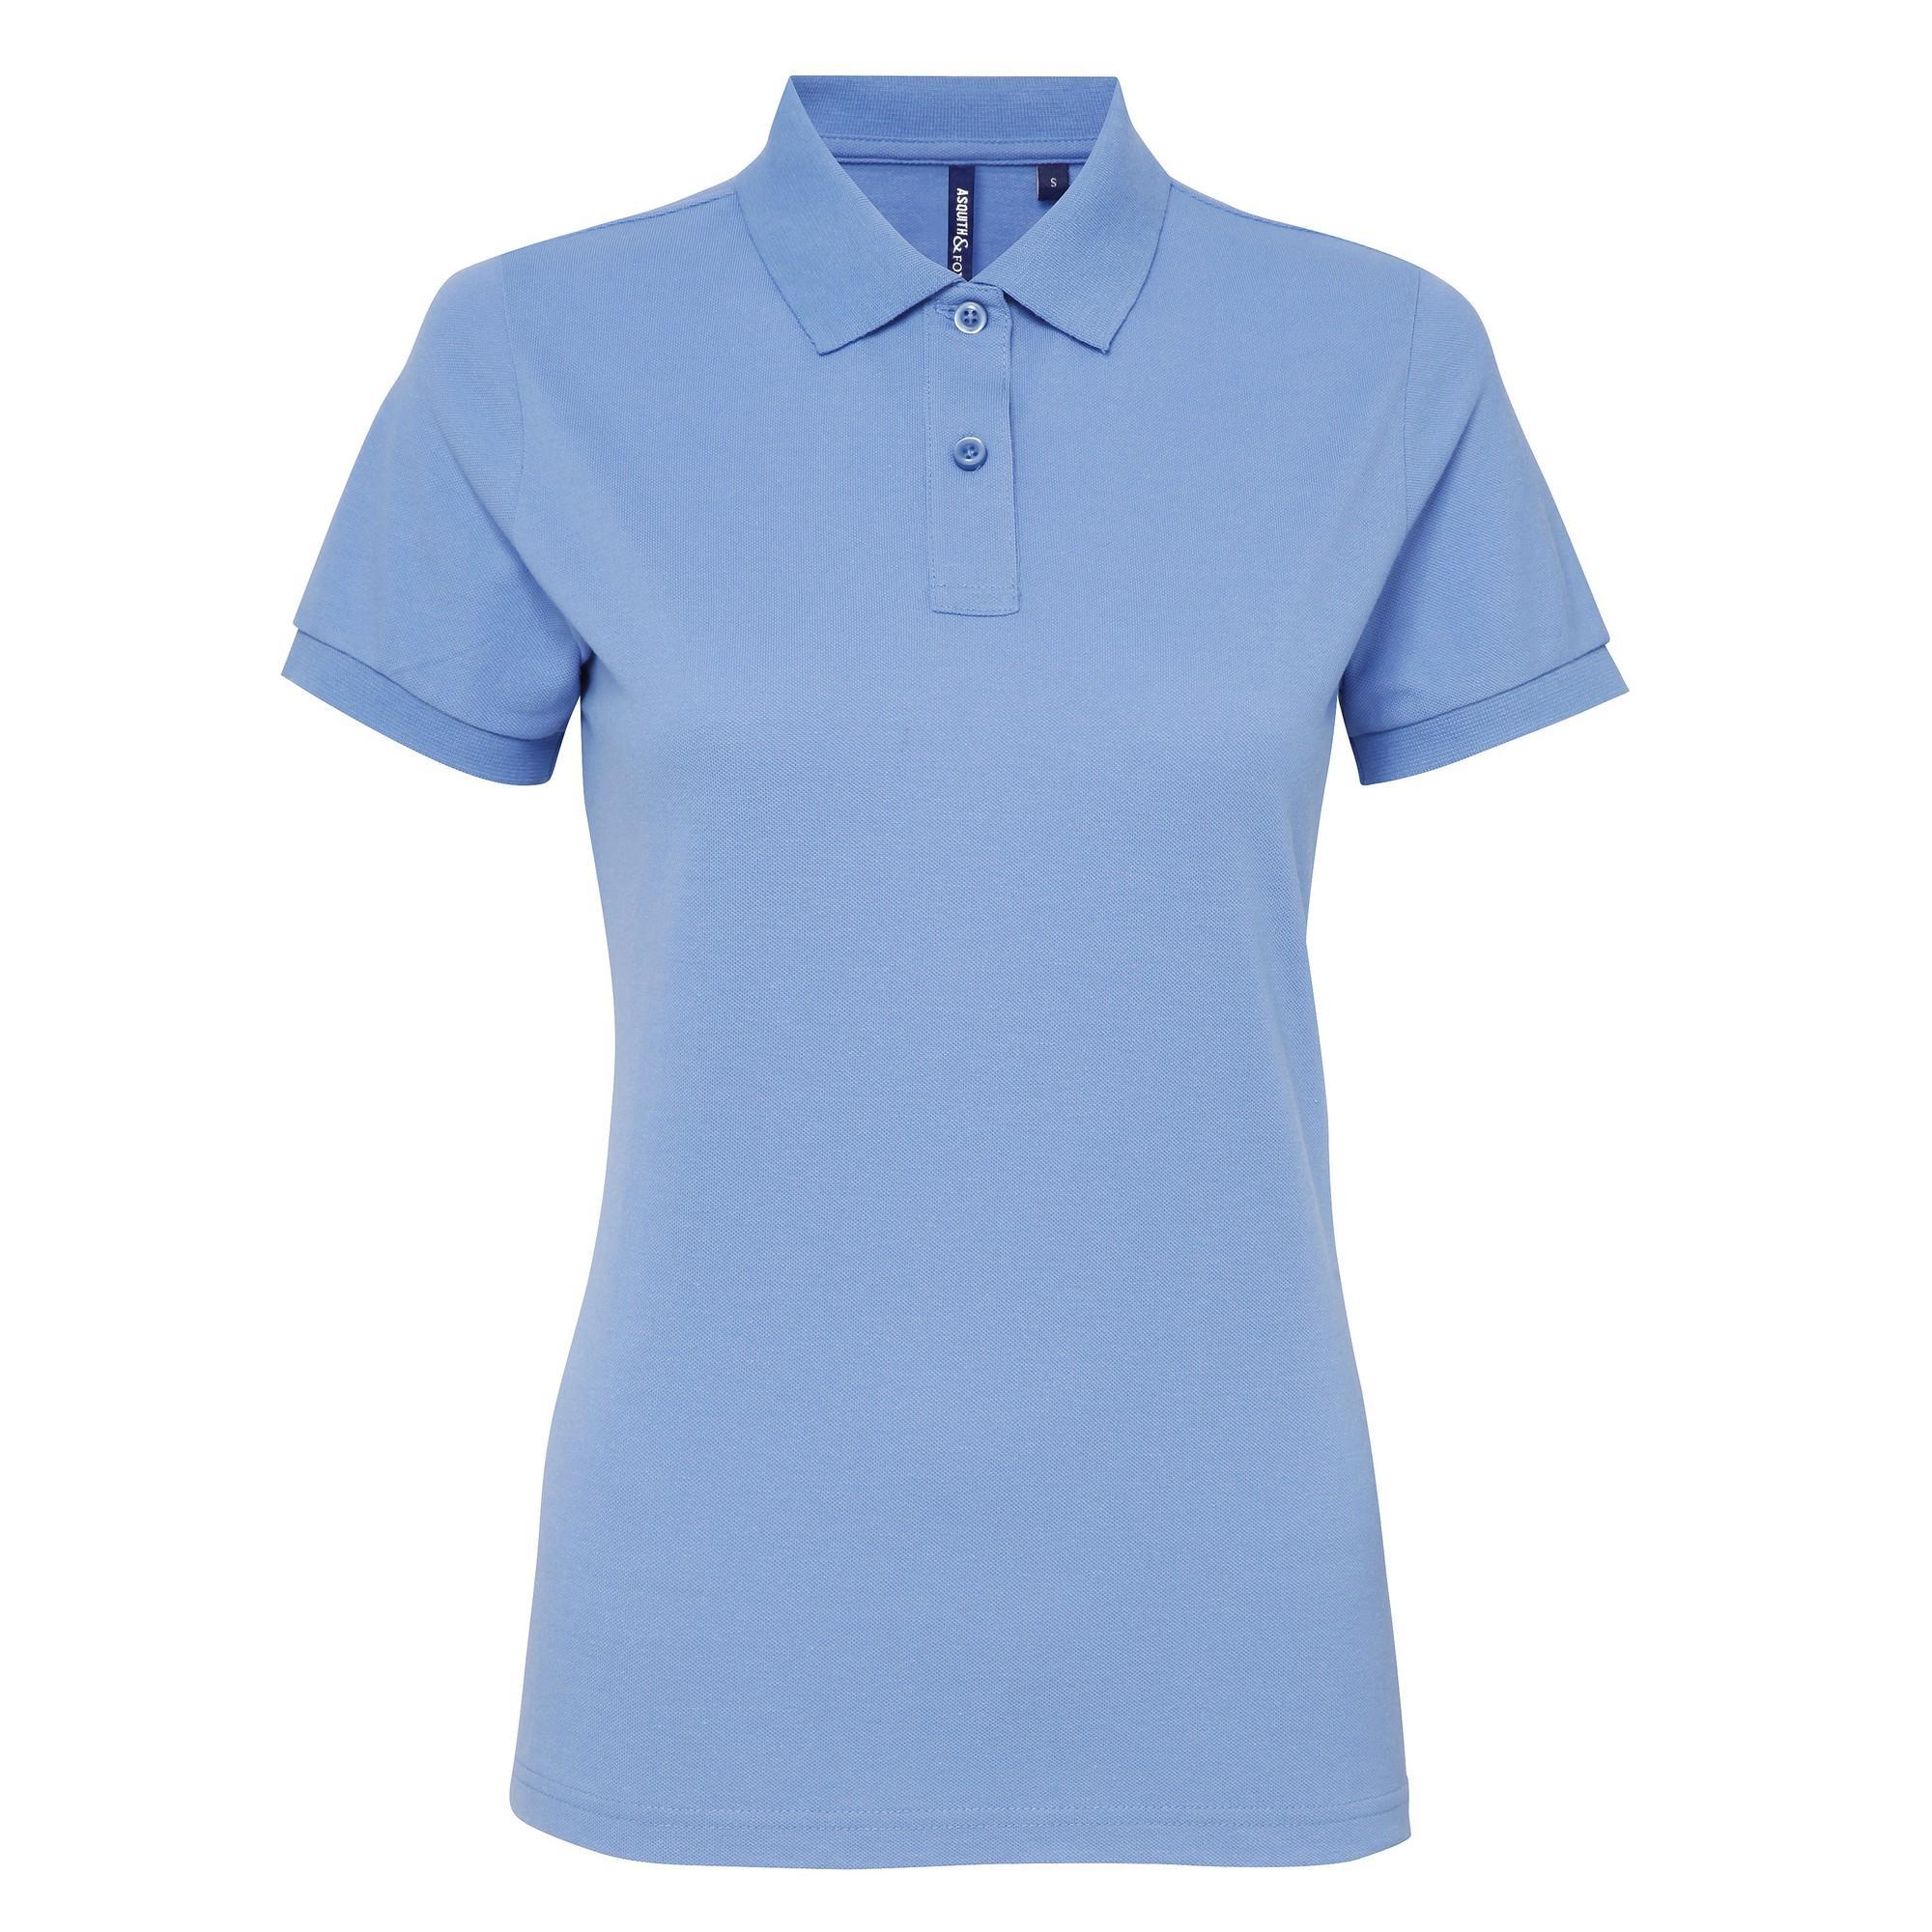 Asquith & Fox Womens/Ladies Short Sleeve Performance Blend Polo Shirt (Cornflower) (S)